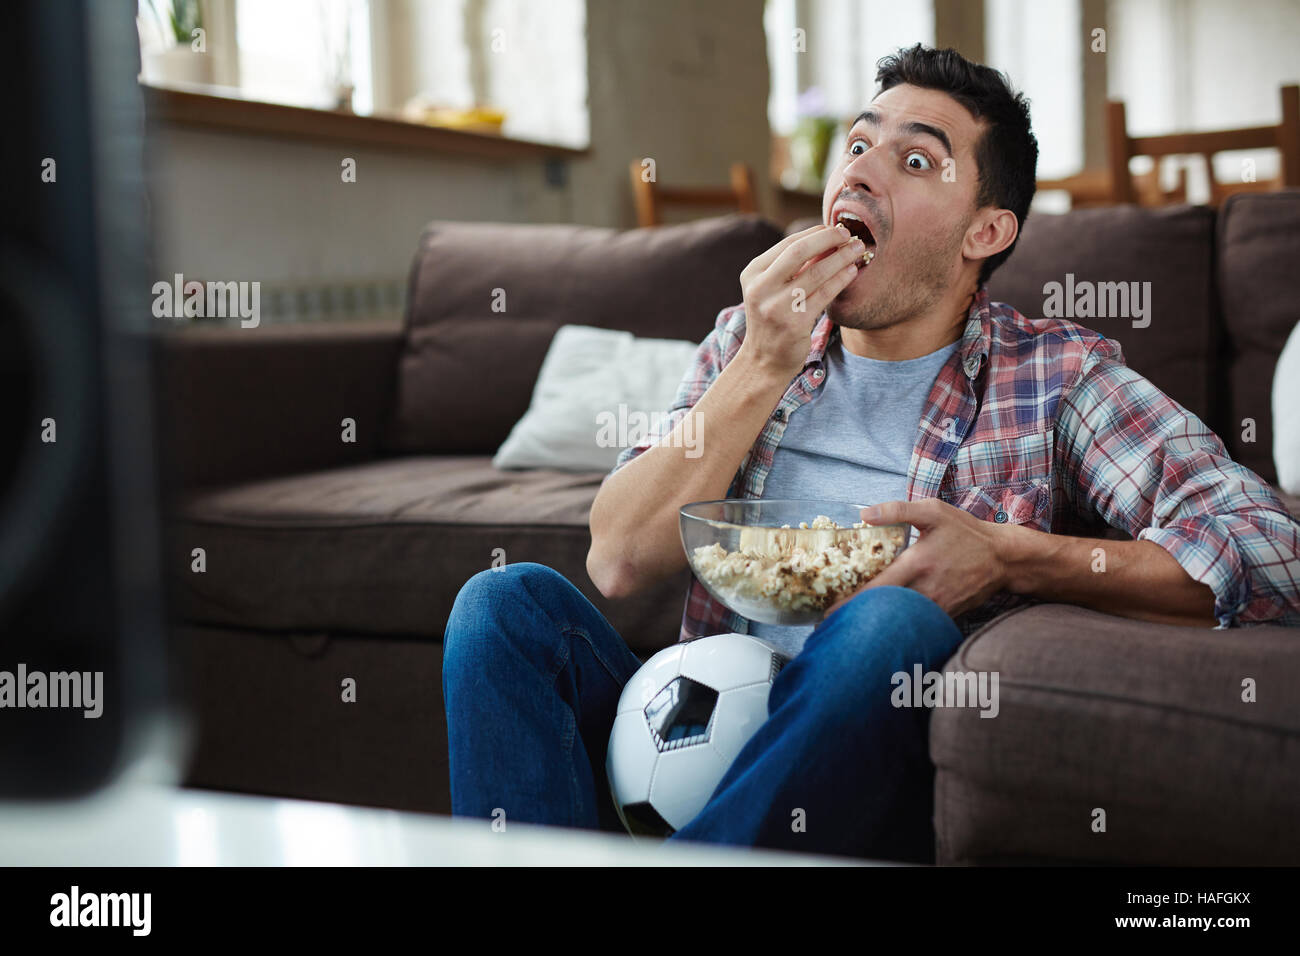 Astonished guy eating popcorn while watching curious tv program Stock Photo